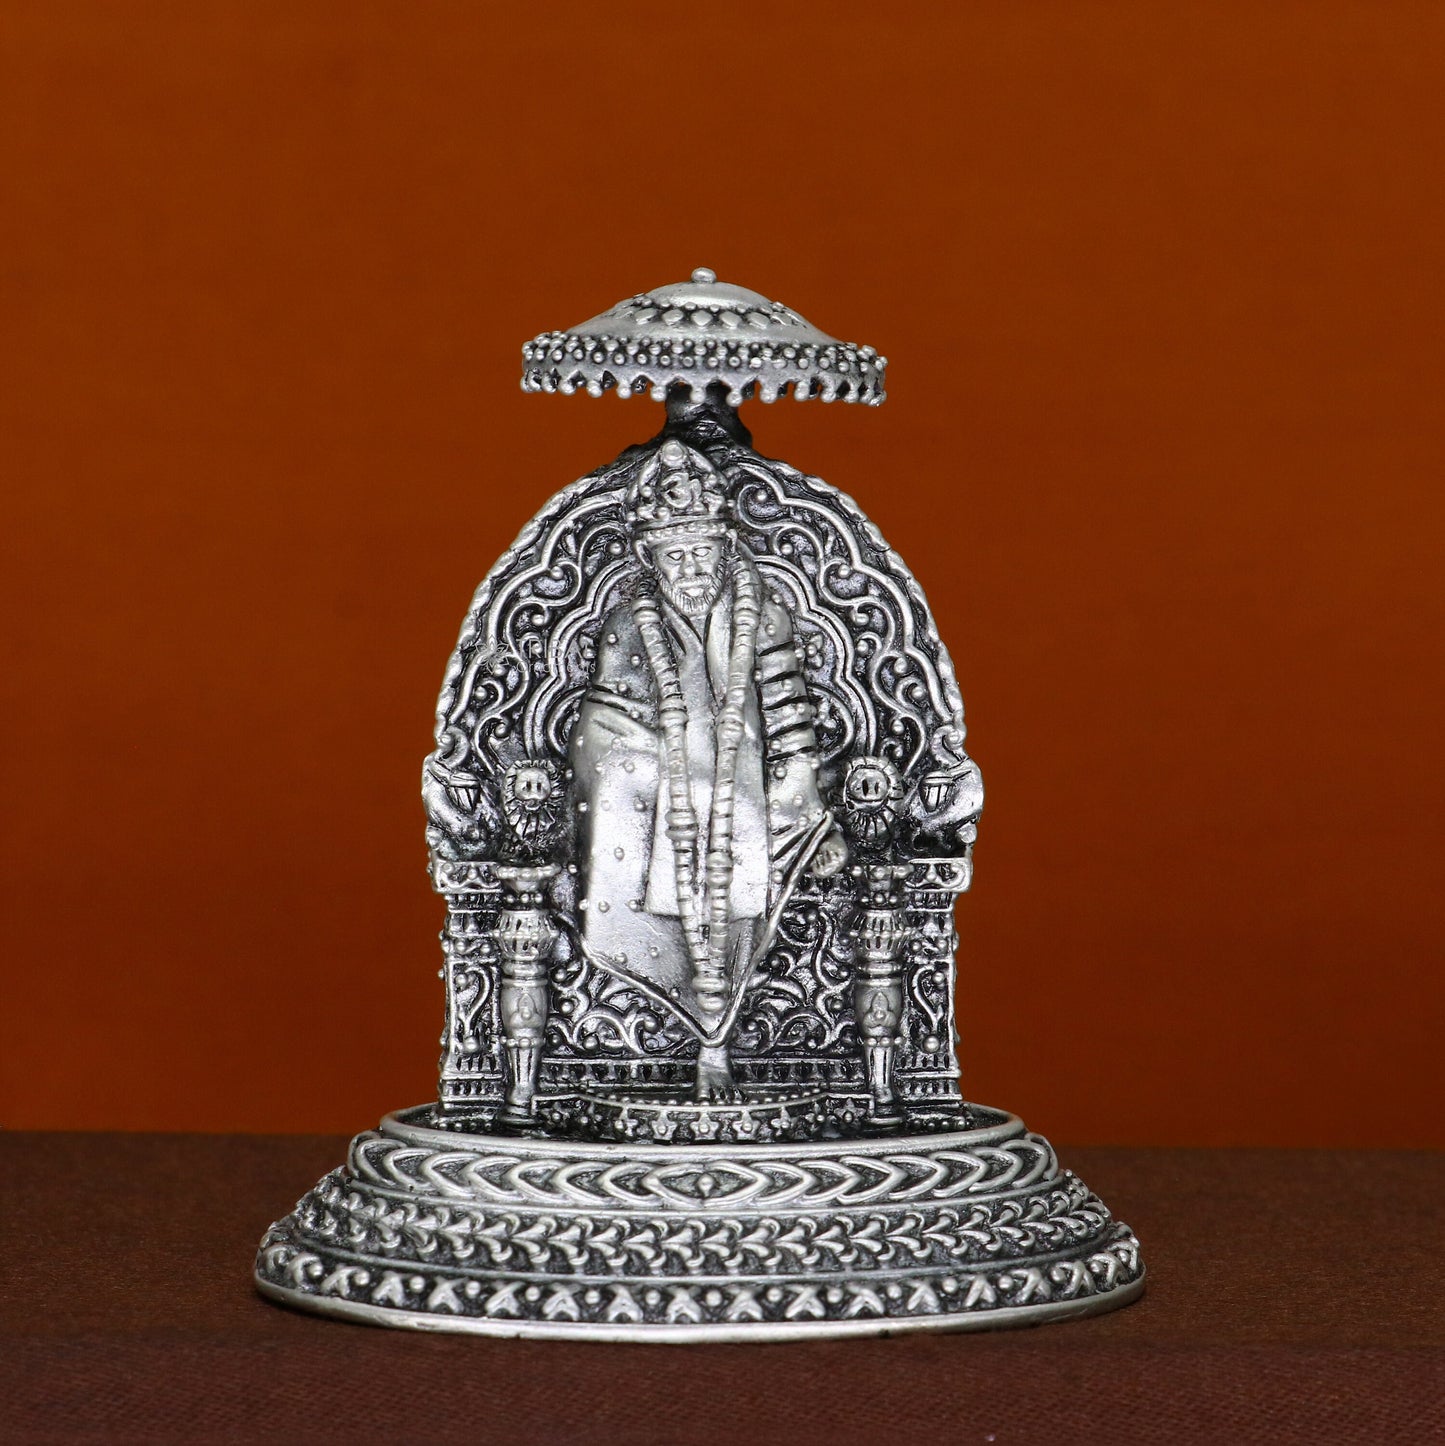 925 sterling silver handmade Divine Hindu idol deity SIRDI Sai Baba statue divine Statue Sculpture figurine puja article gifting art702 - TRIBAL ORNAMENTS